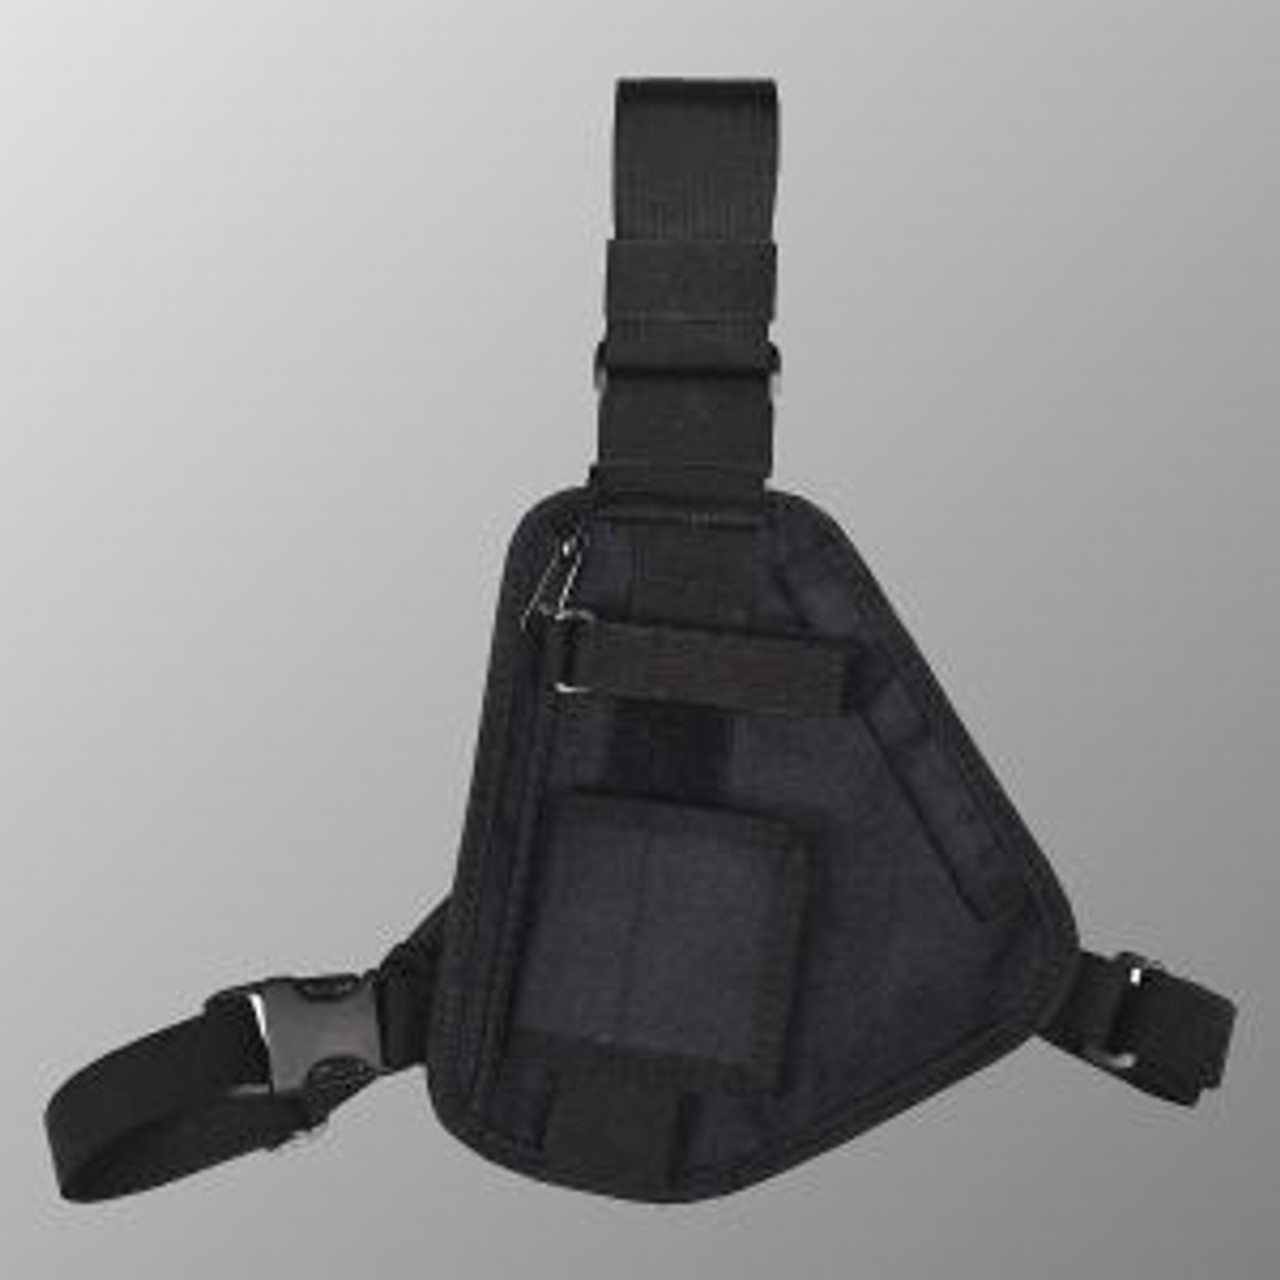 ICOM IC-F3011 3-Point Chest Harness - Black